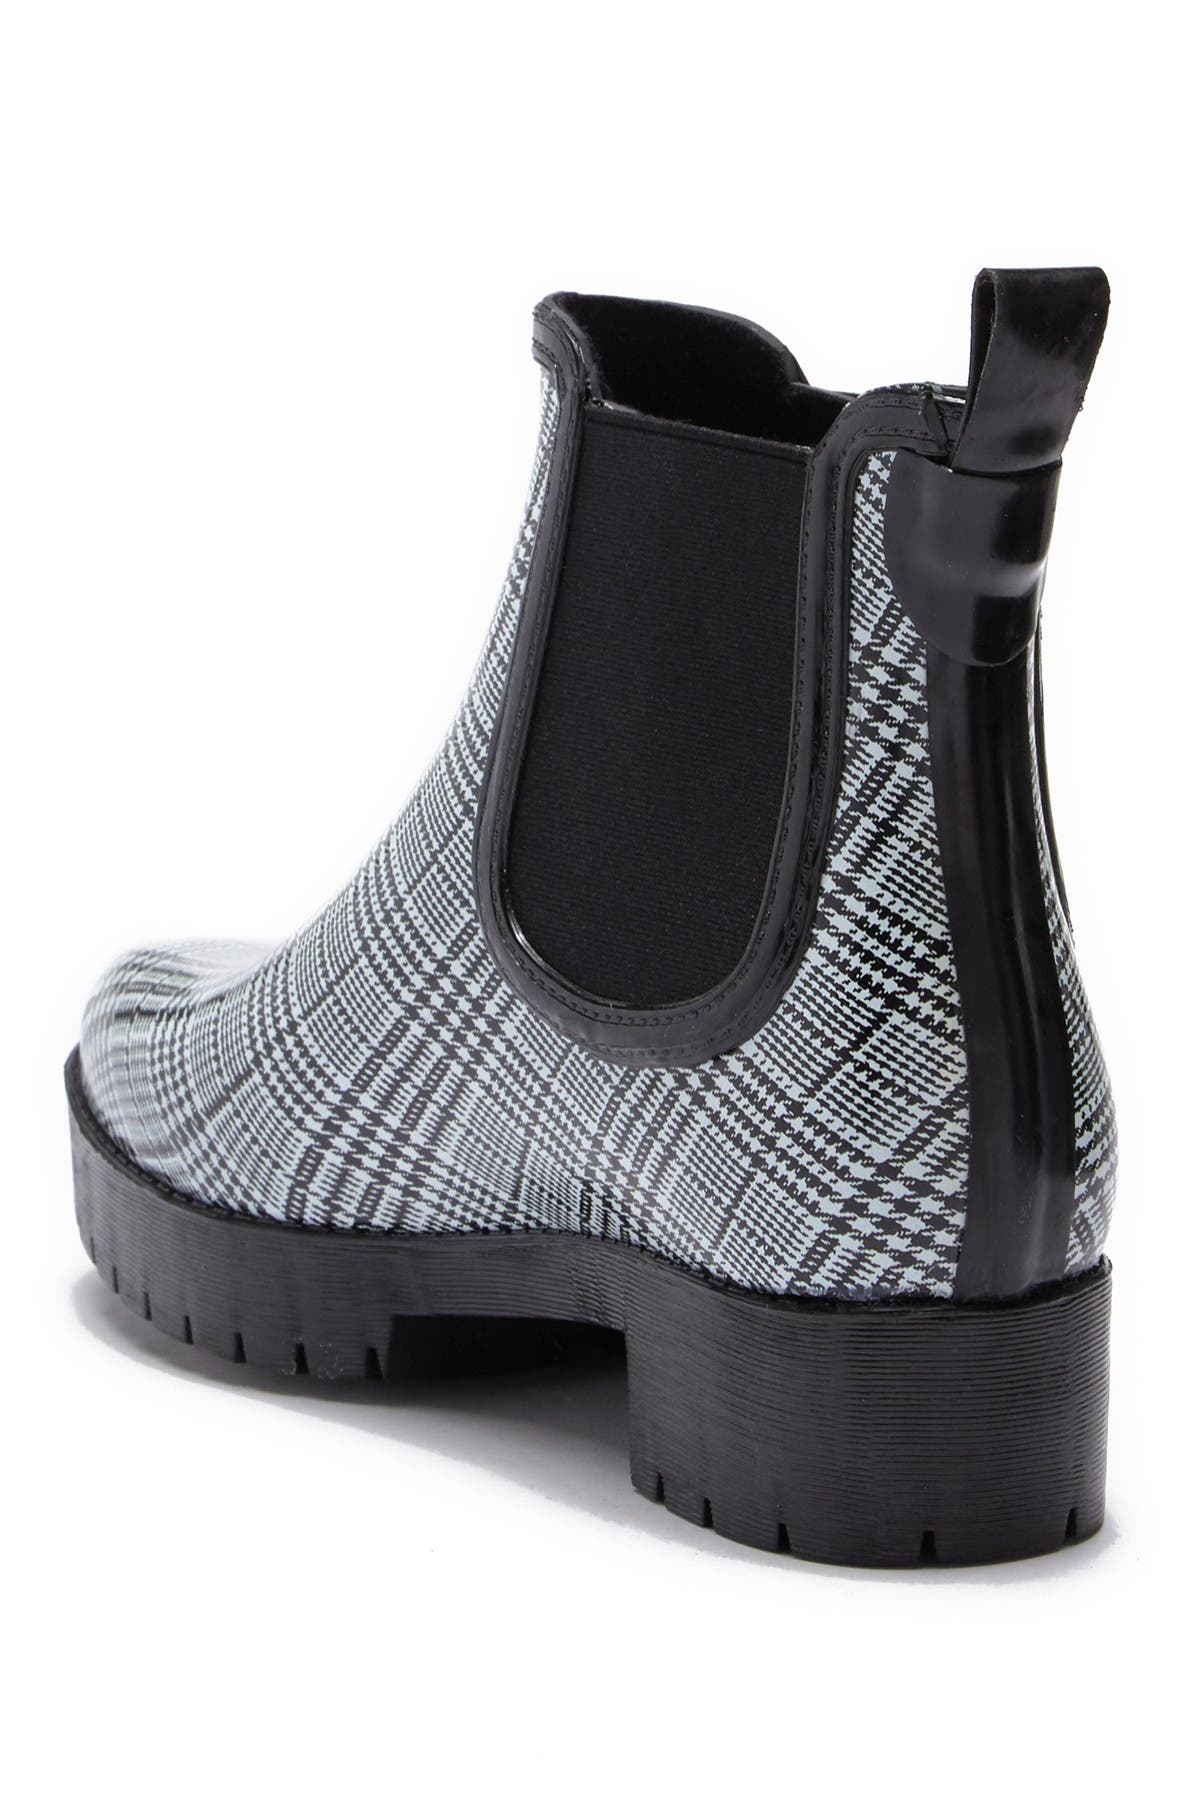 nordstrom rack jeffrey campbell rain boots